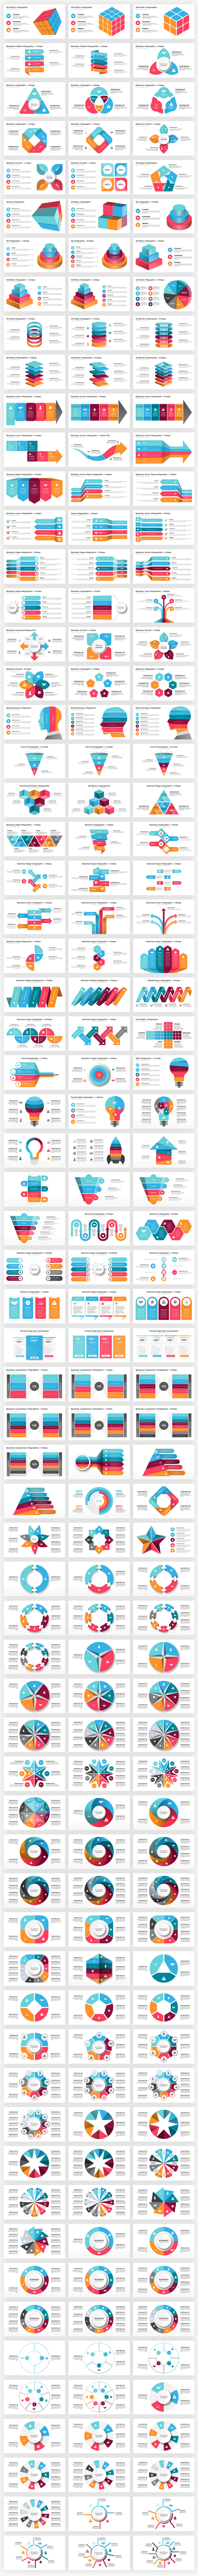 Infographics Complete Bundle PowerPoint Templates - 47